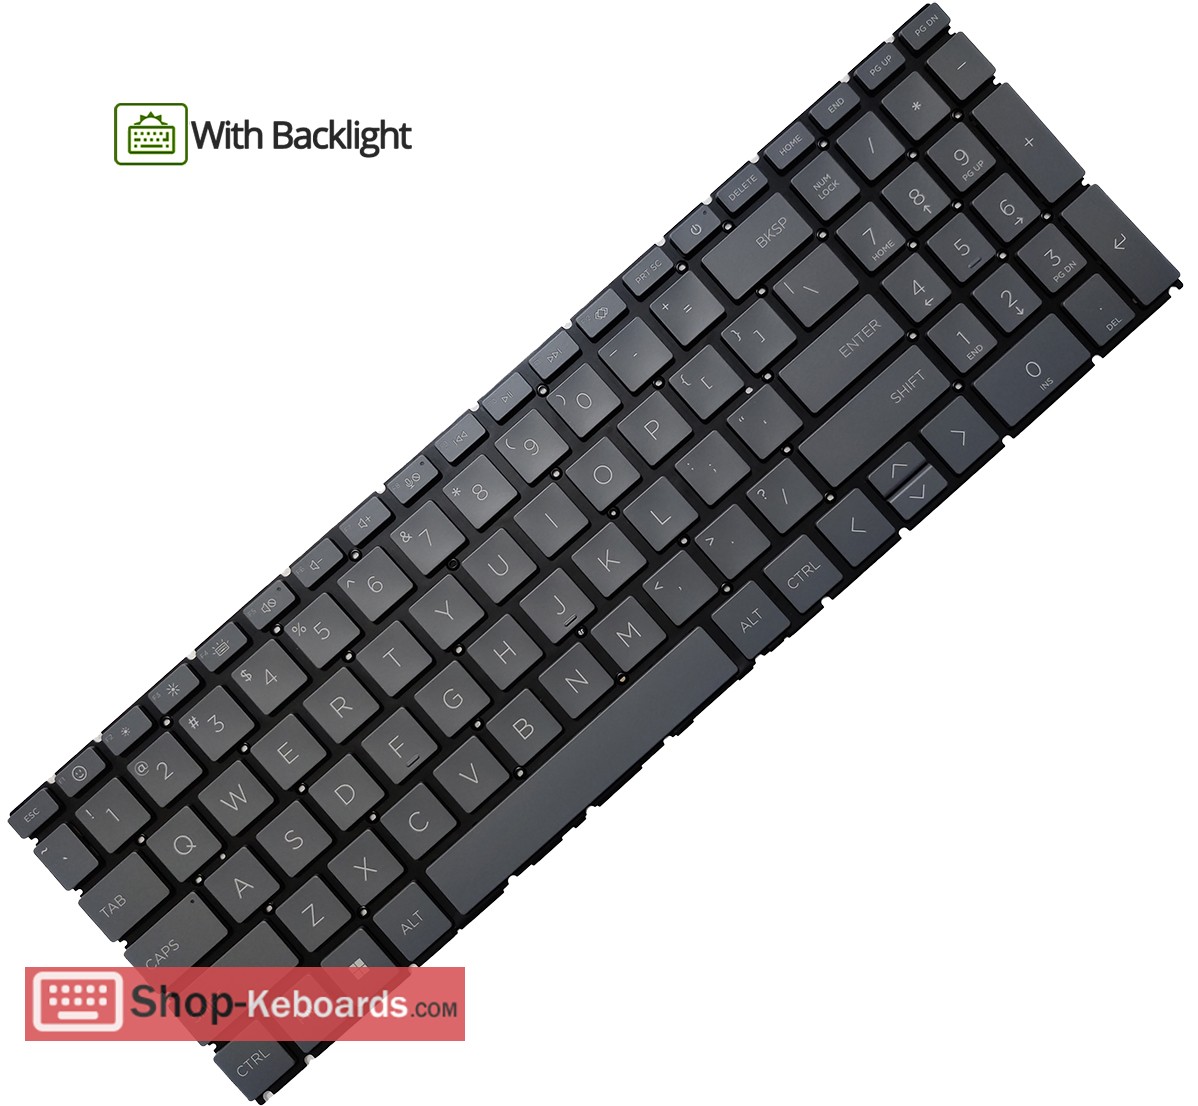 HP N36761-251  Keyboard replacement